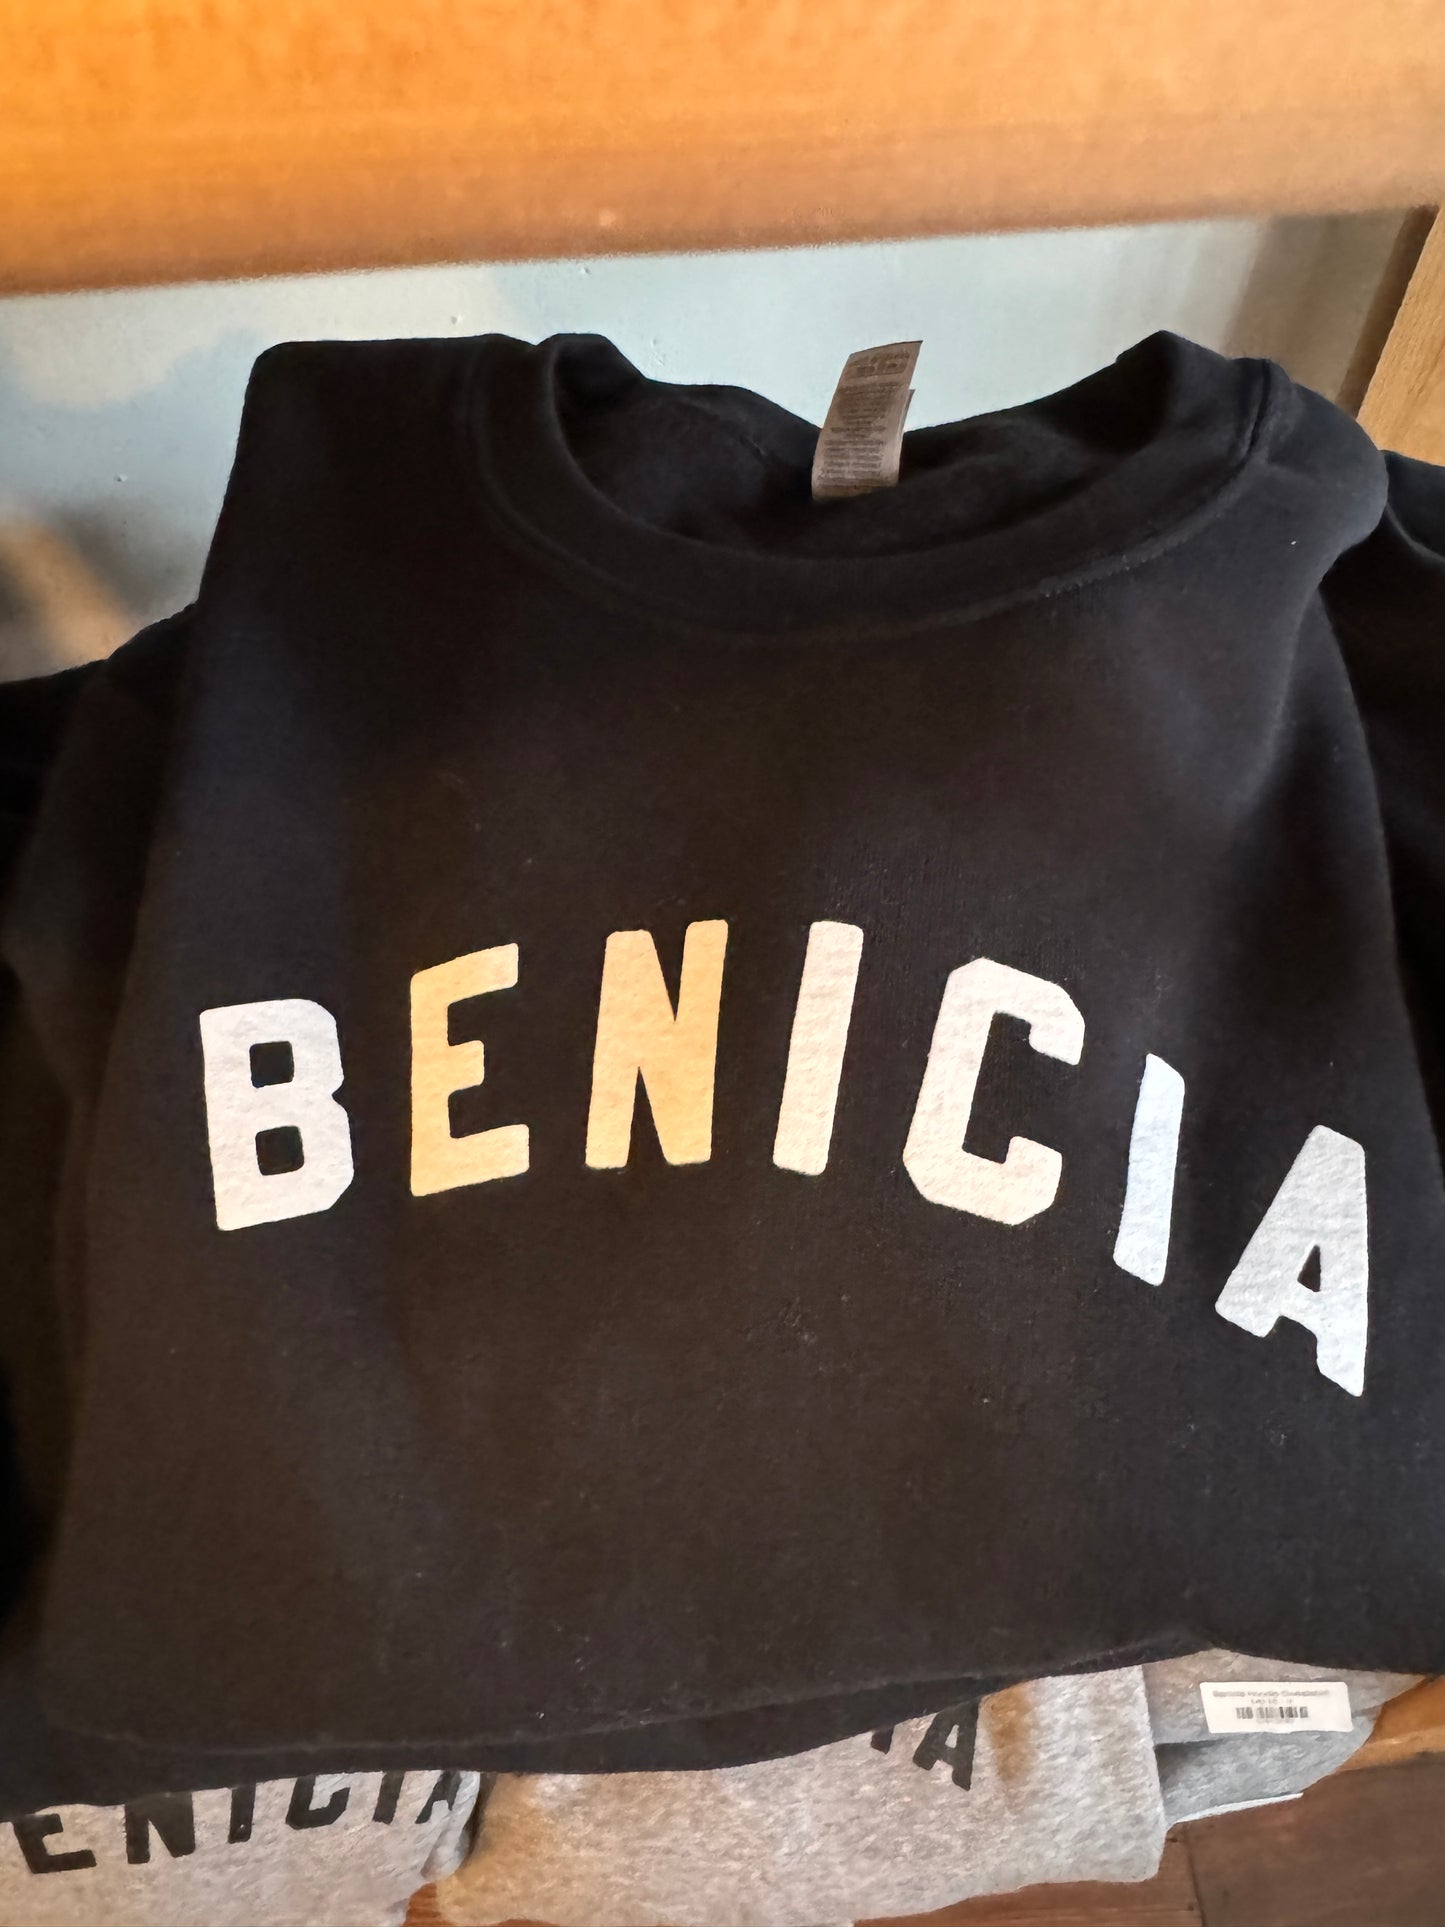 Benicia Black Crewneck Sweatshirt